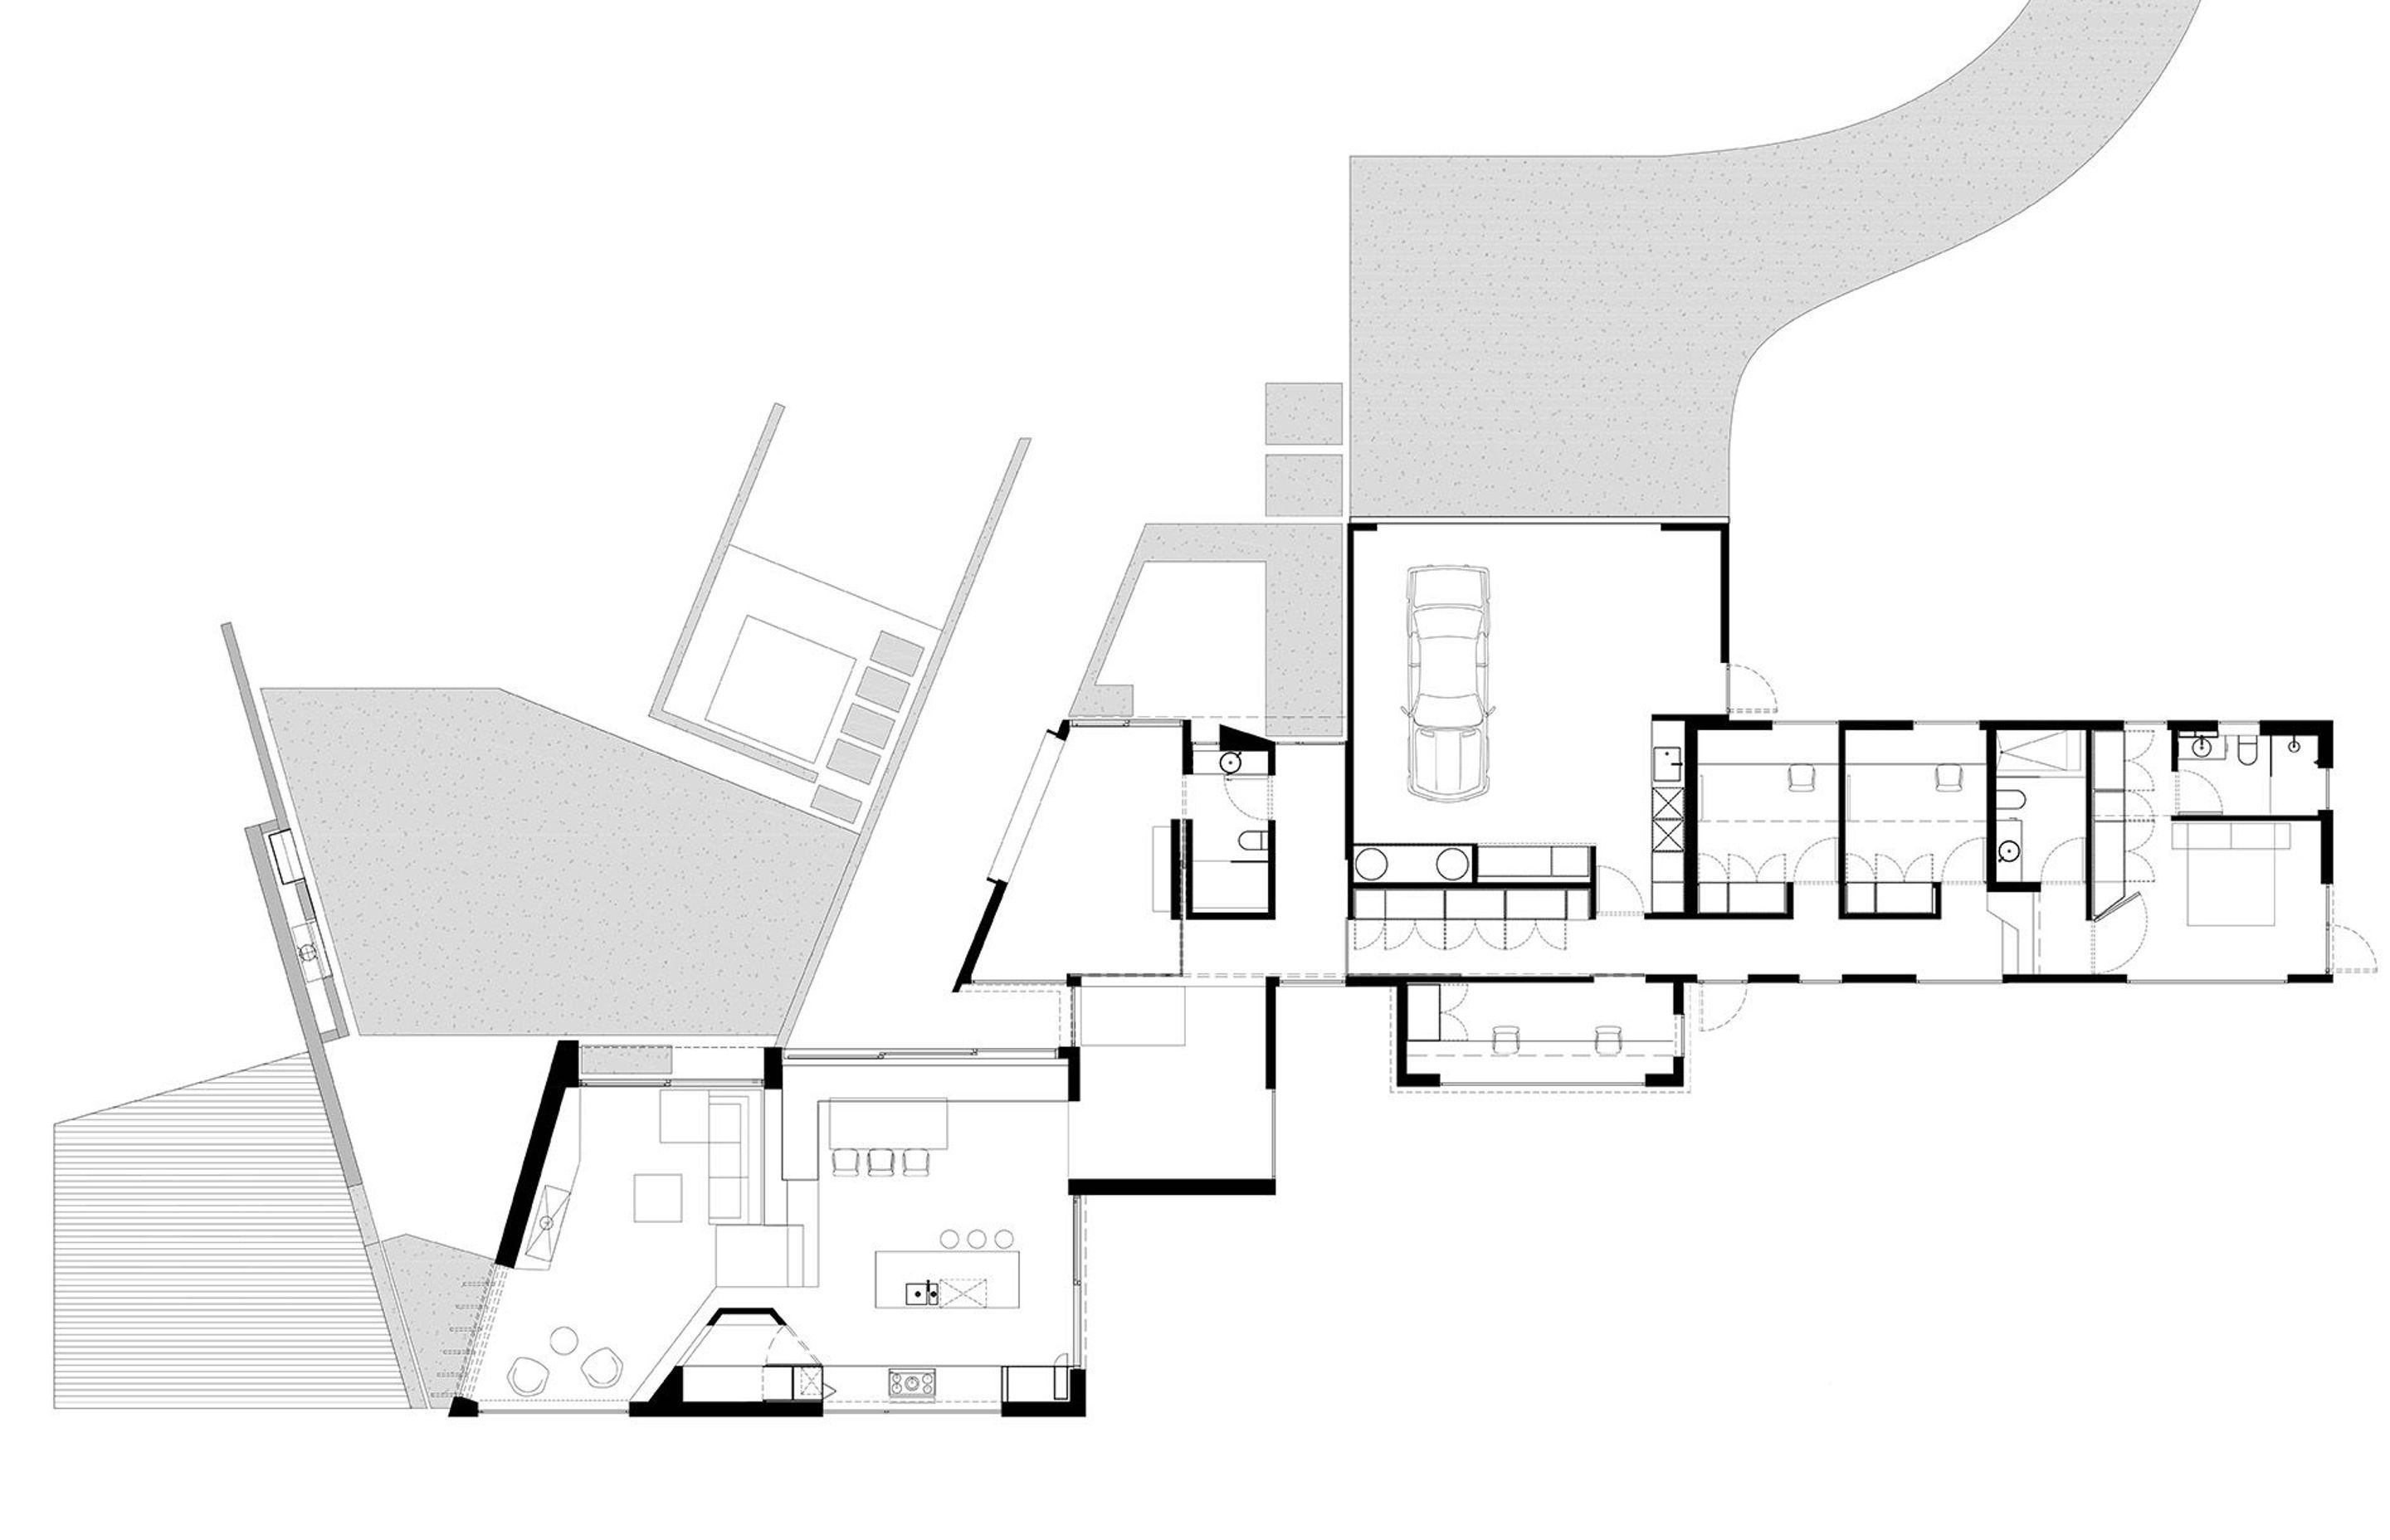 Hill House floor plan by Hyndman Taylor Architects.